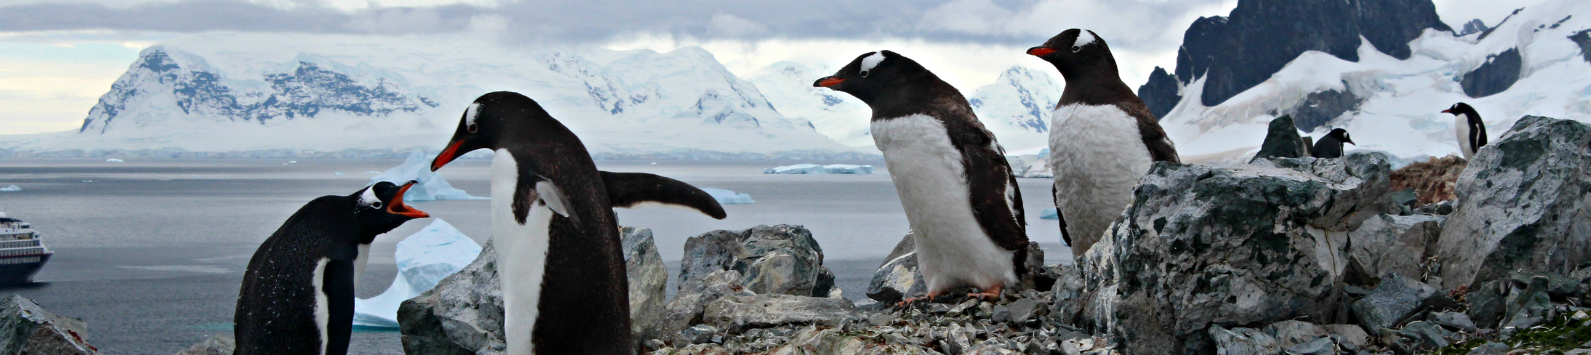 Penguins on Danko Island